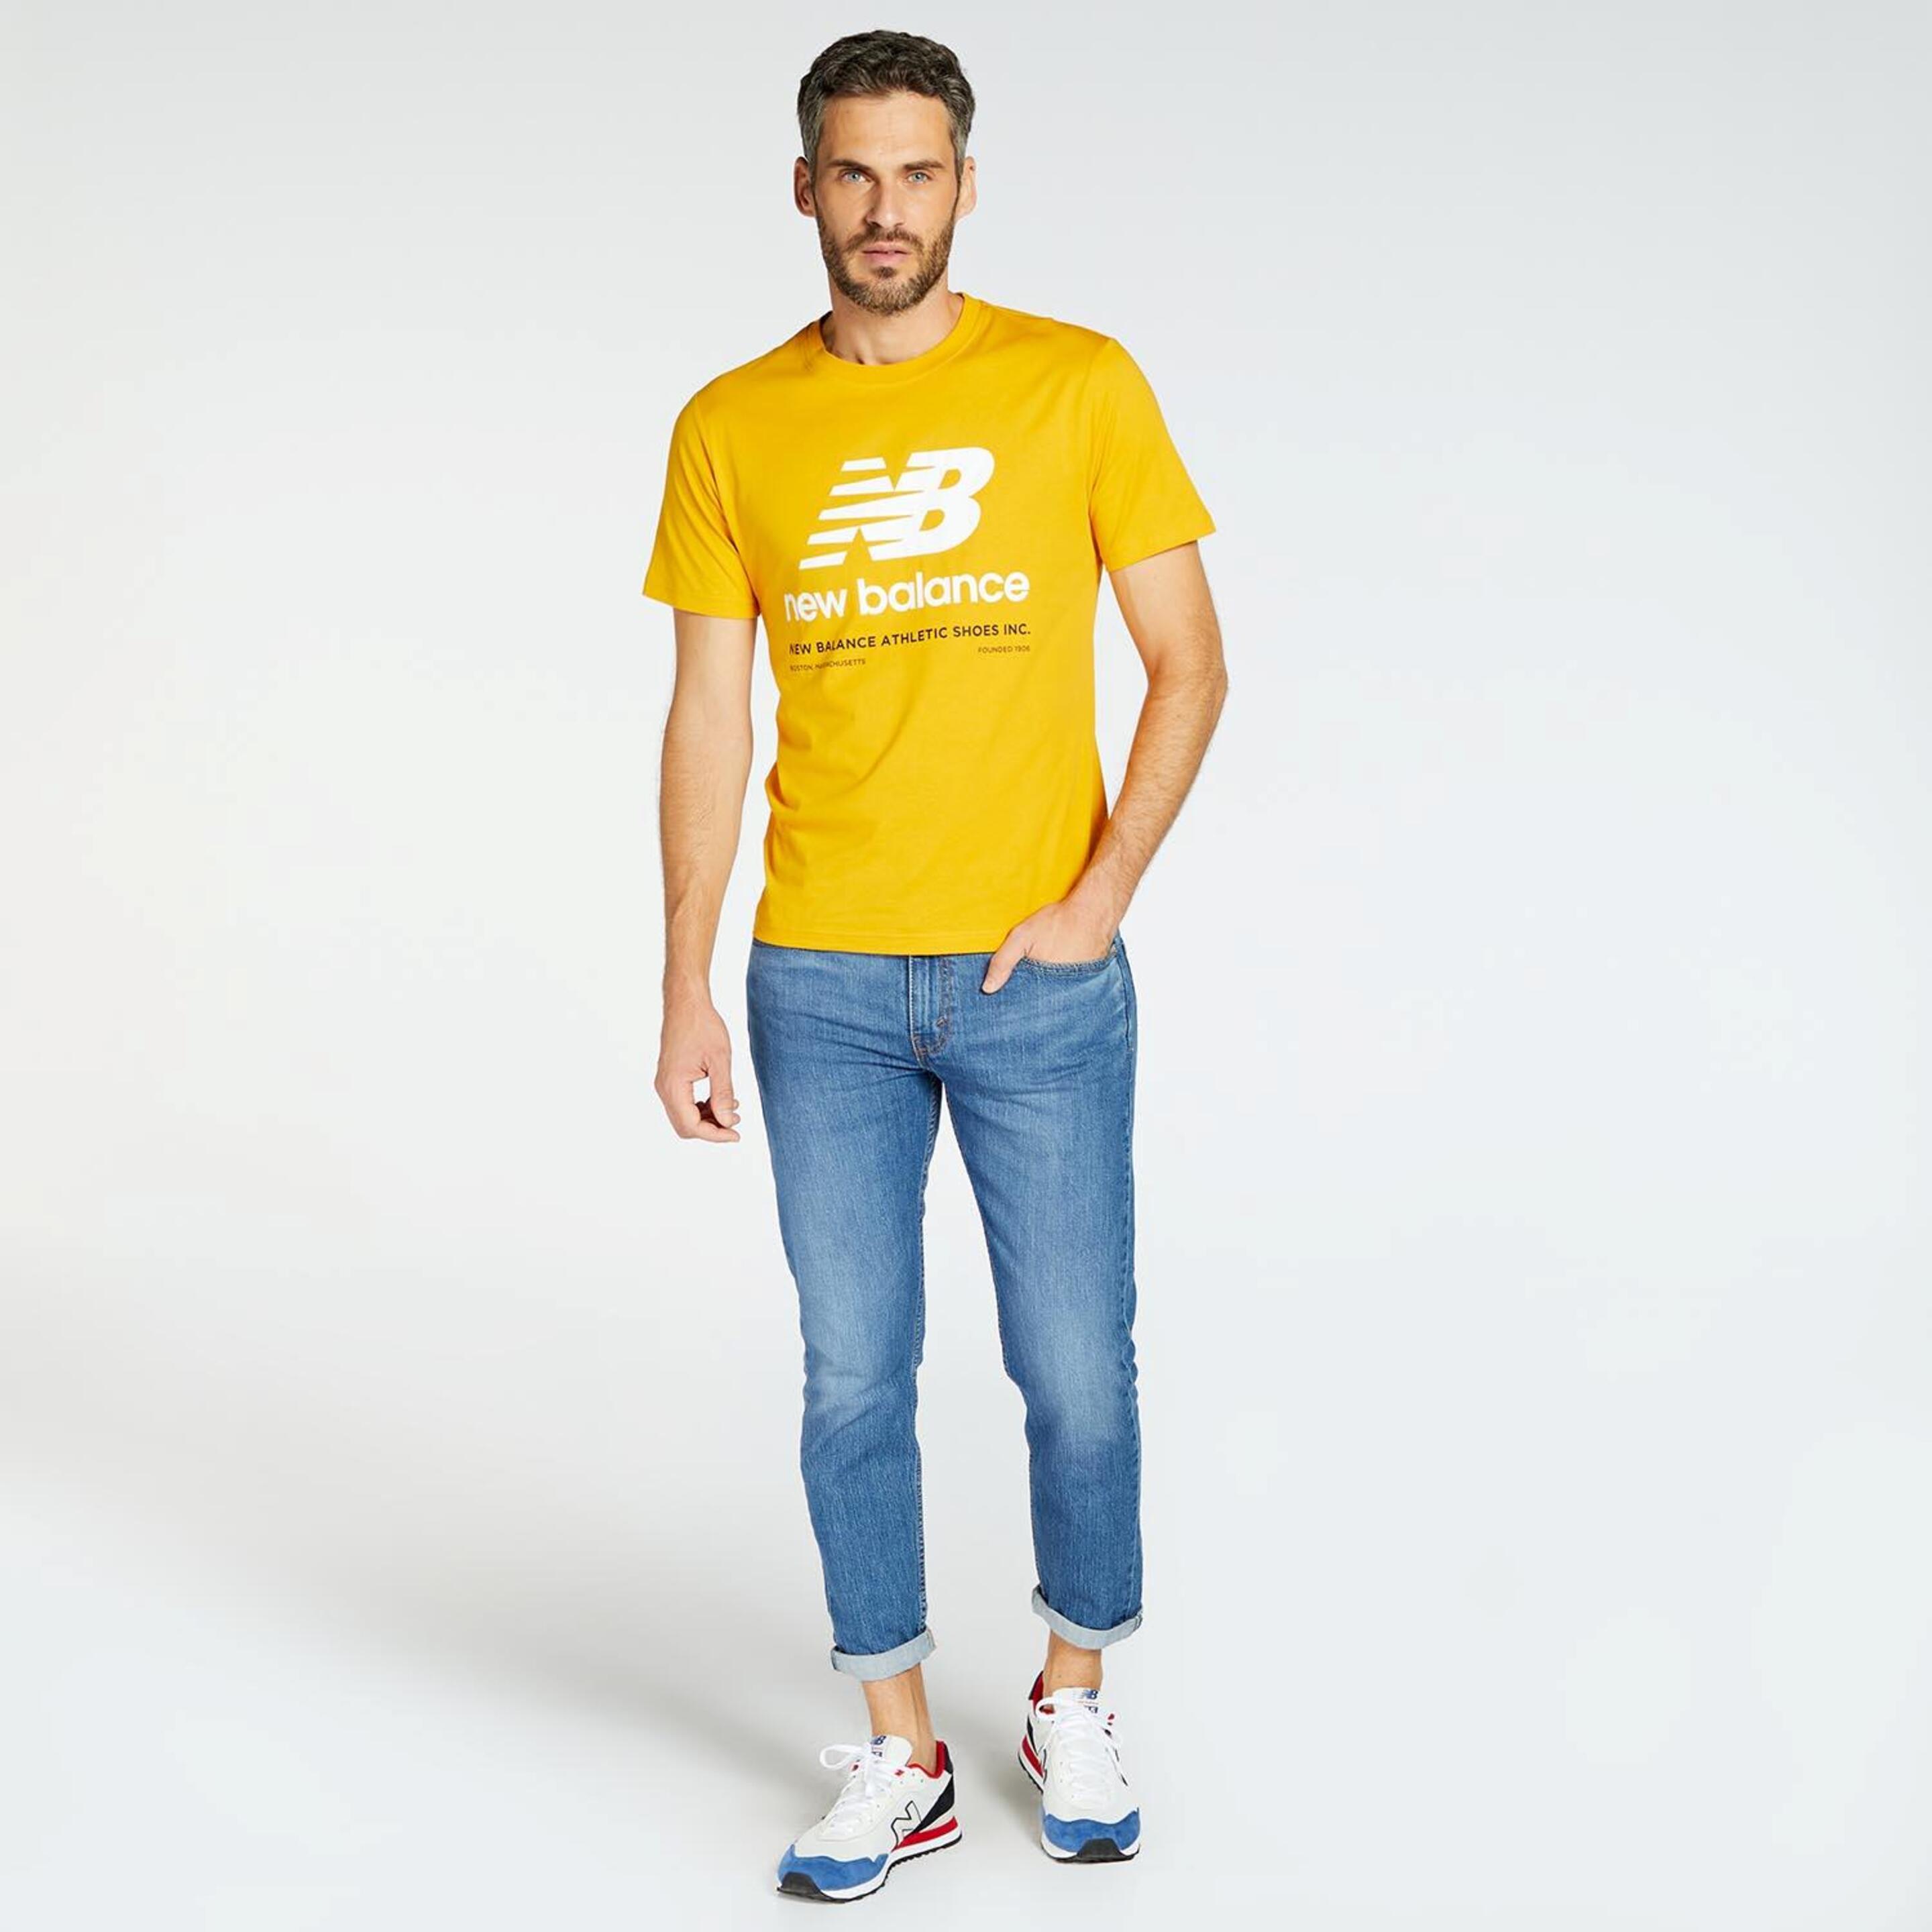 New Balance Frame - Amarillo - Camiseta Hombre